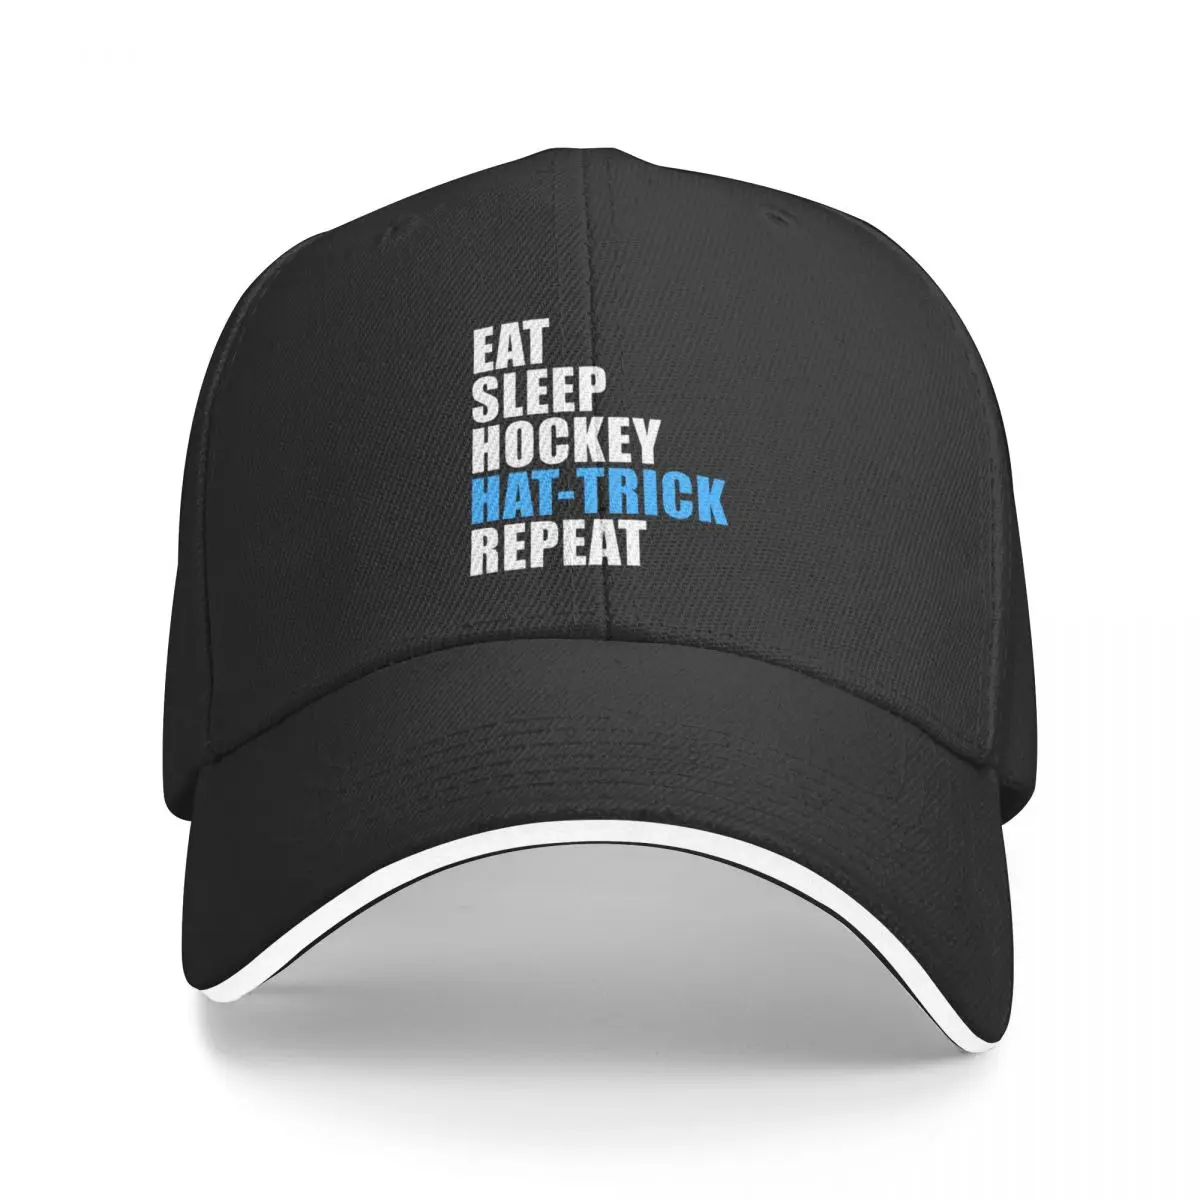 

Eat sleep hockey hat-trick repeat II Baseball Cap Hip Hop New In Hat foam party Hat Caps For Women Men's